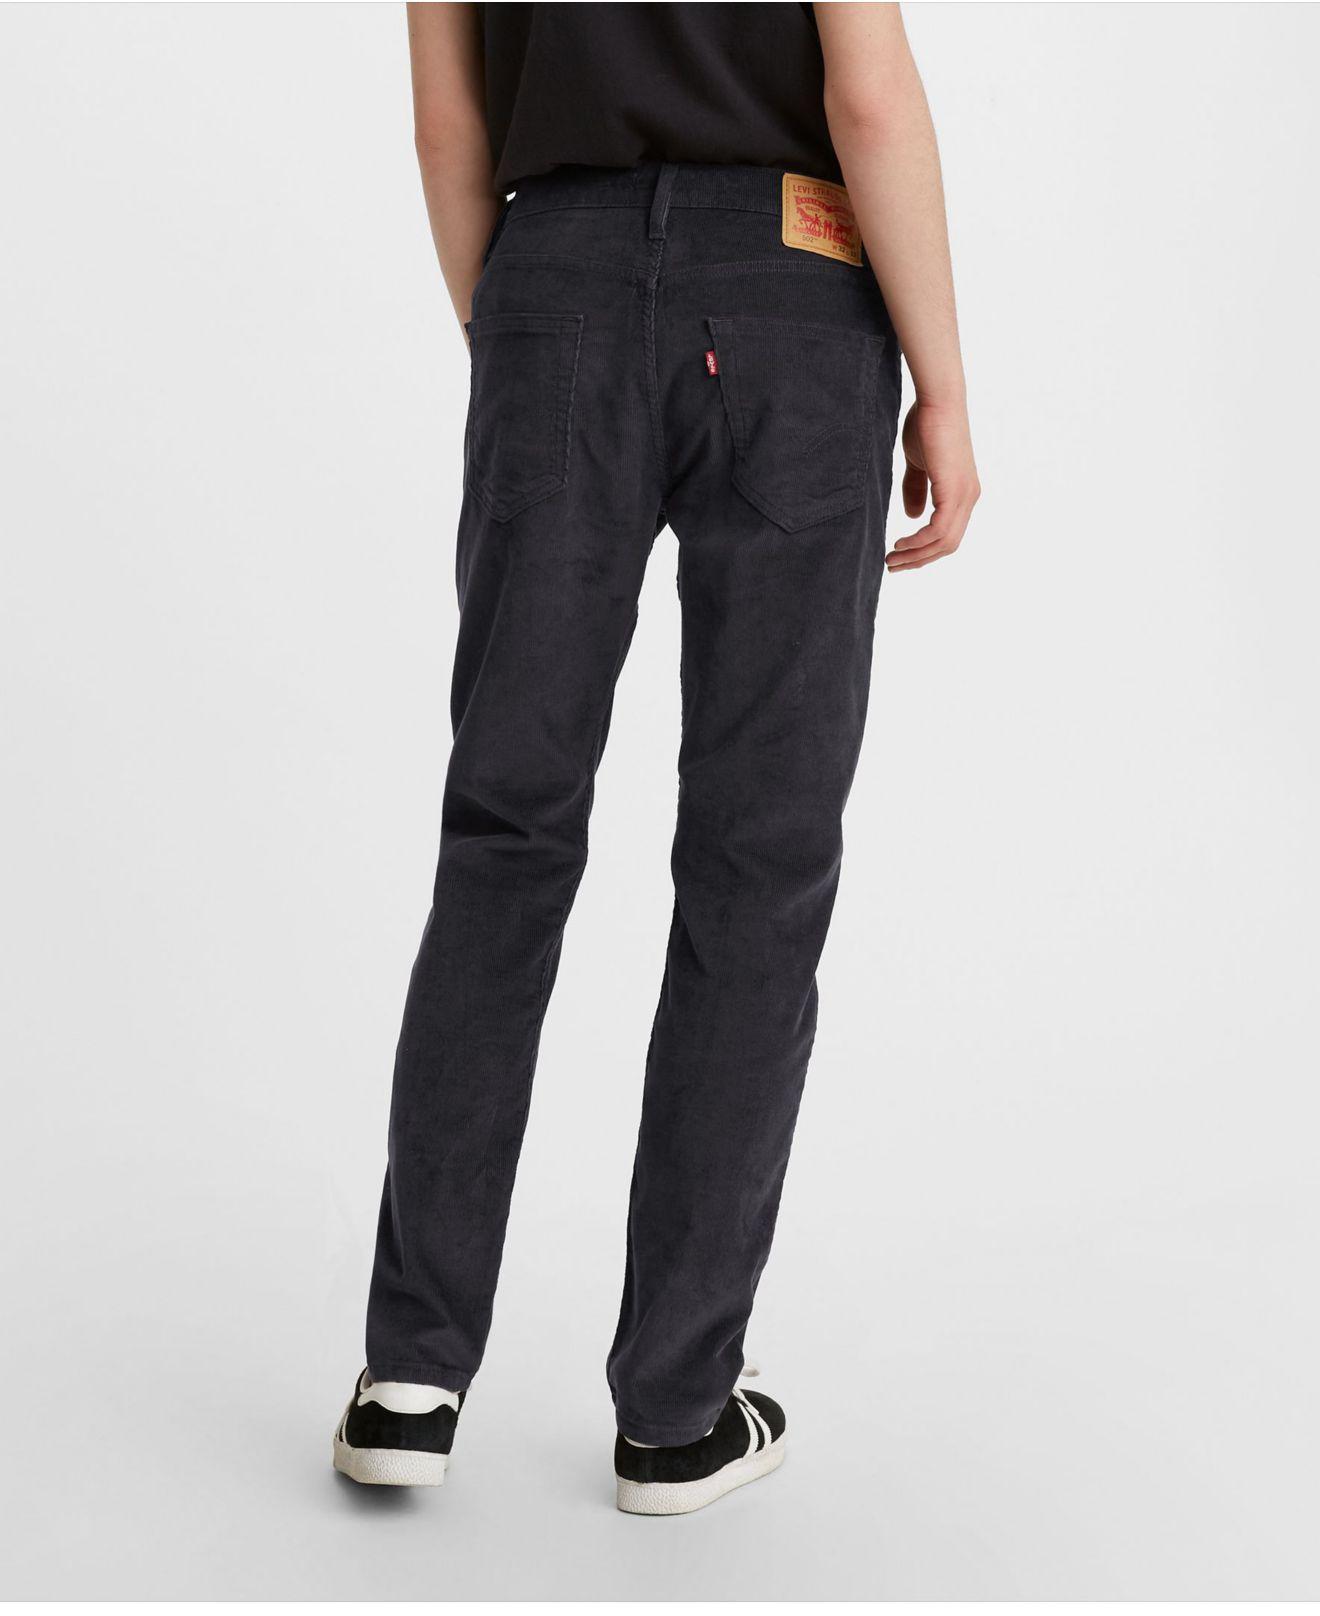 Levi's Denim 502 Taper Corduroy Jeans in Black for Men - Lyst